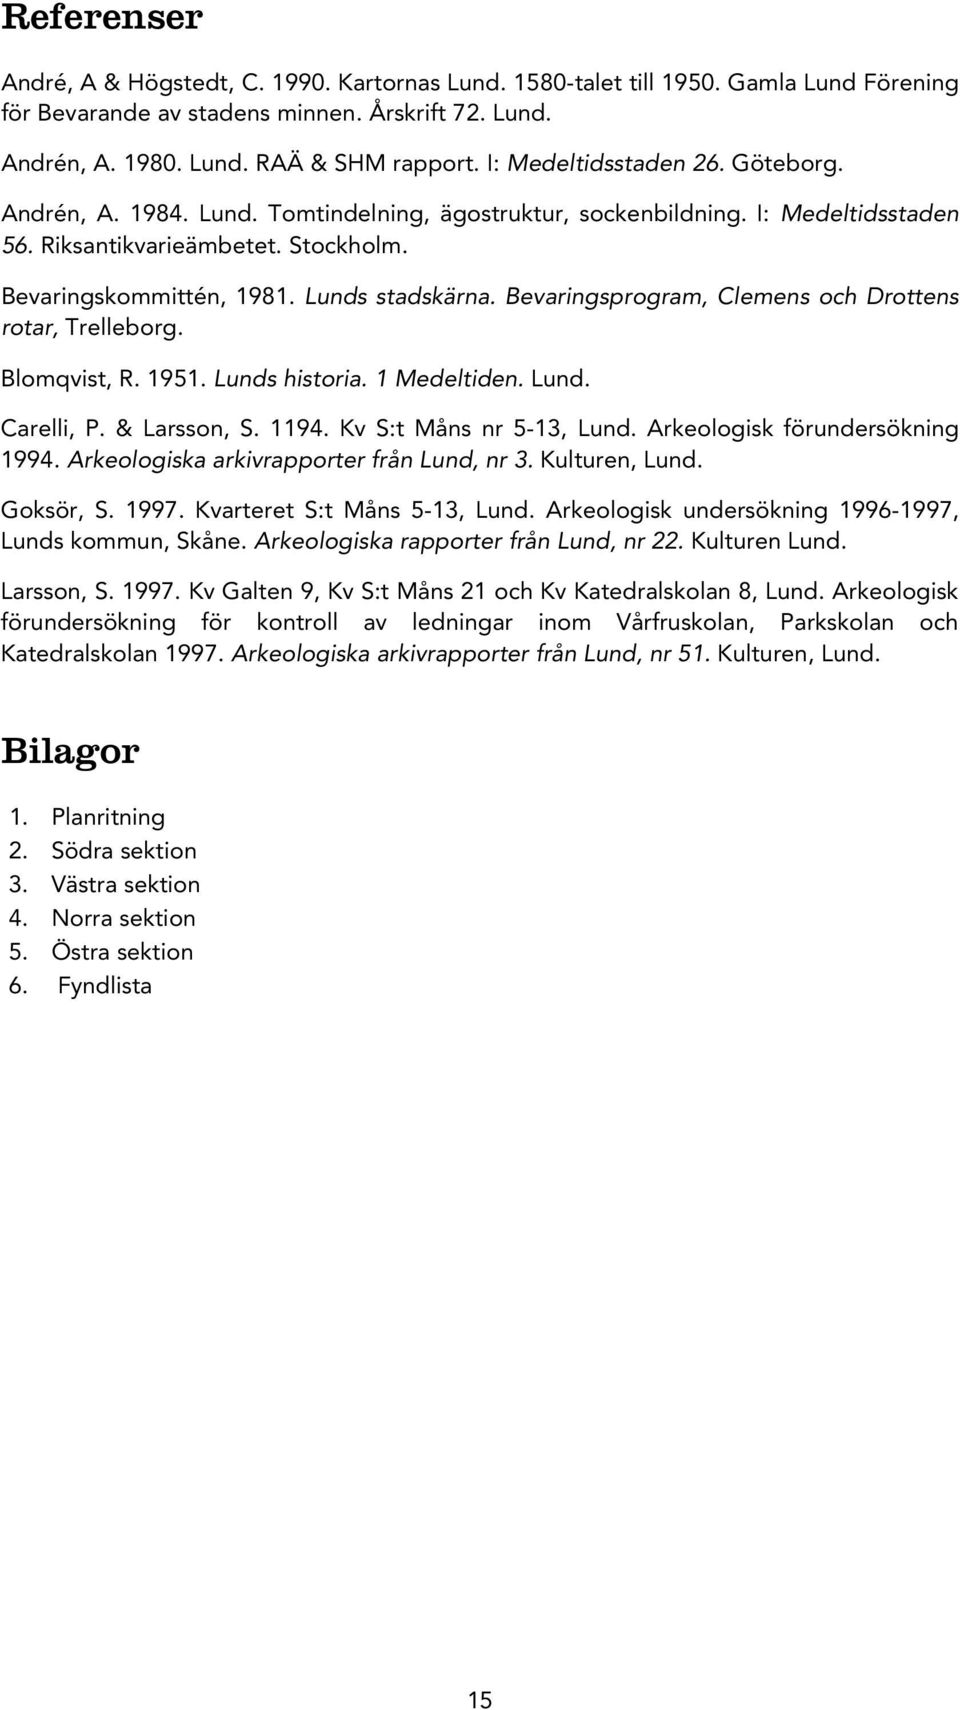 Bevaringsprogram, Clemens och Drottens rotar, Trelleborg. Blomqvist, R. 1951. Lunds historia. 1 Medeltiden. Lund. Carelli, P. & Larsson, S. 1194. Kv S:t Måns nr 5-13, Lund.